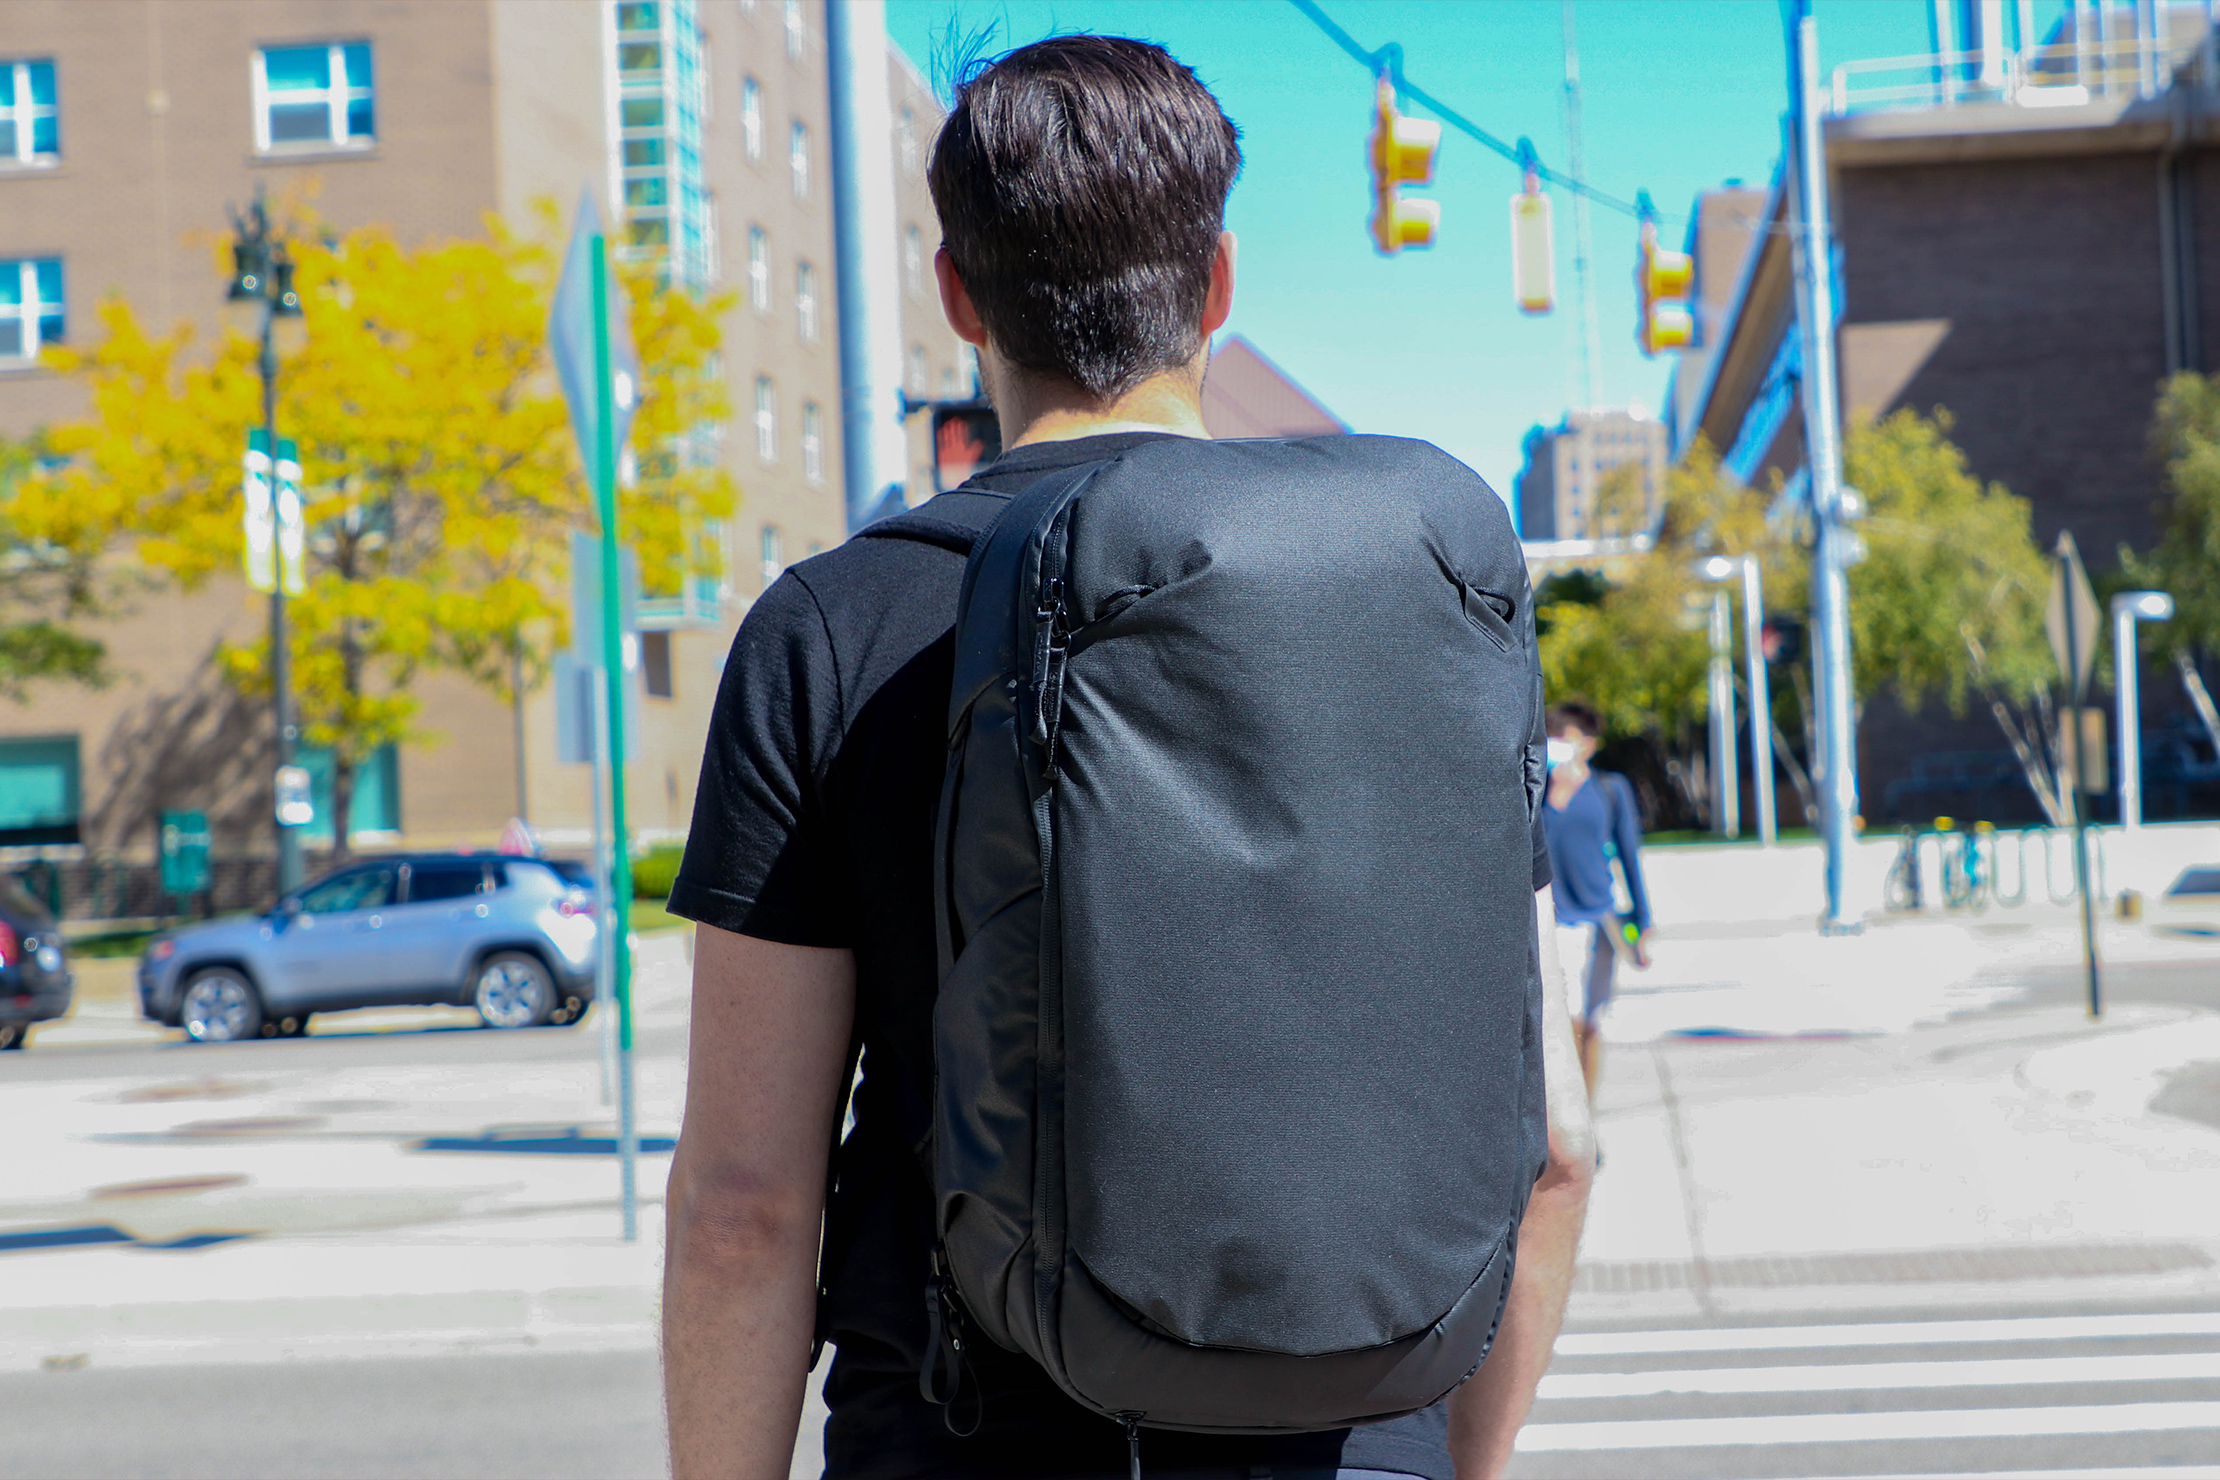 peak design travel backpack under seat